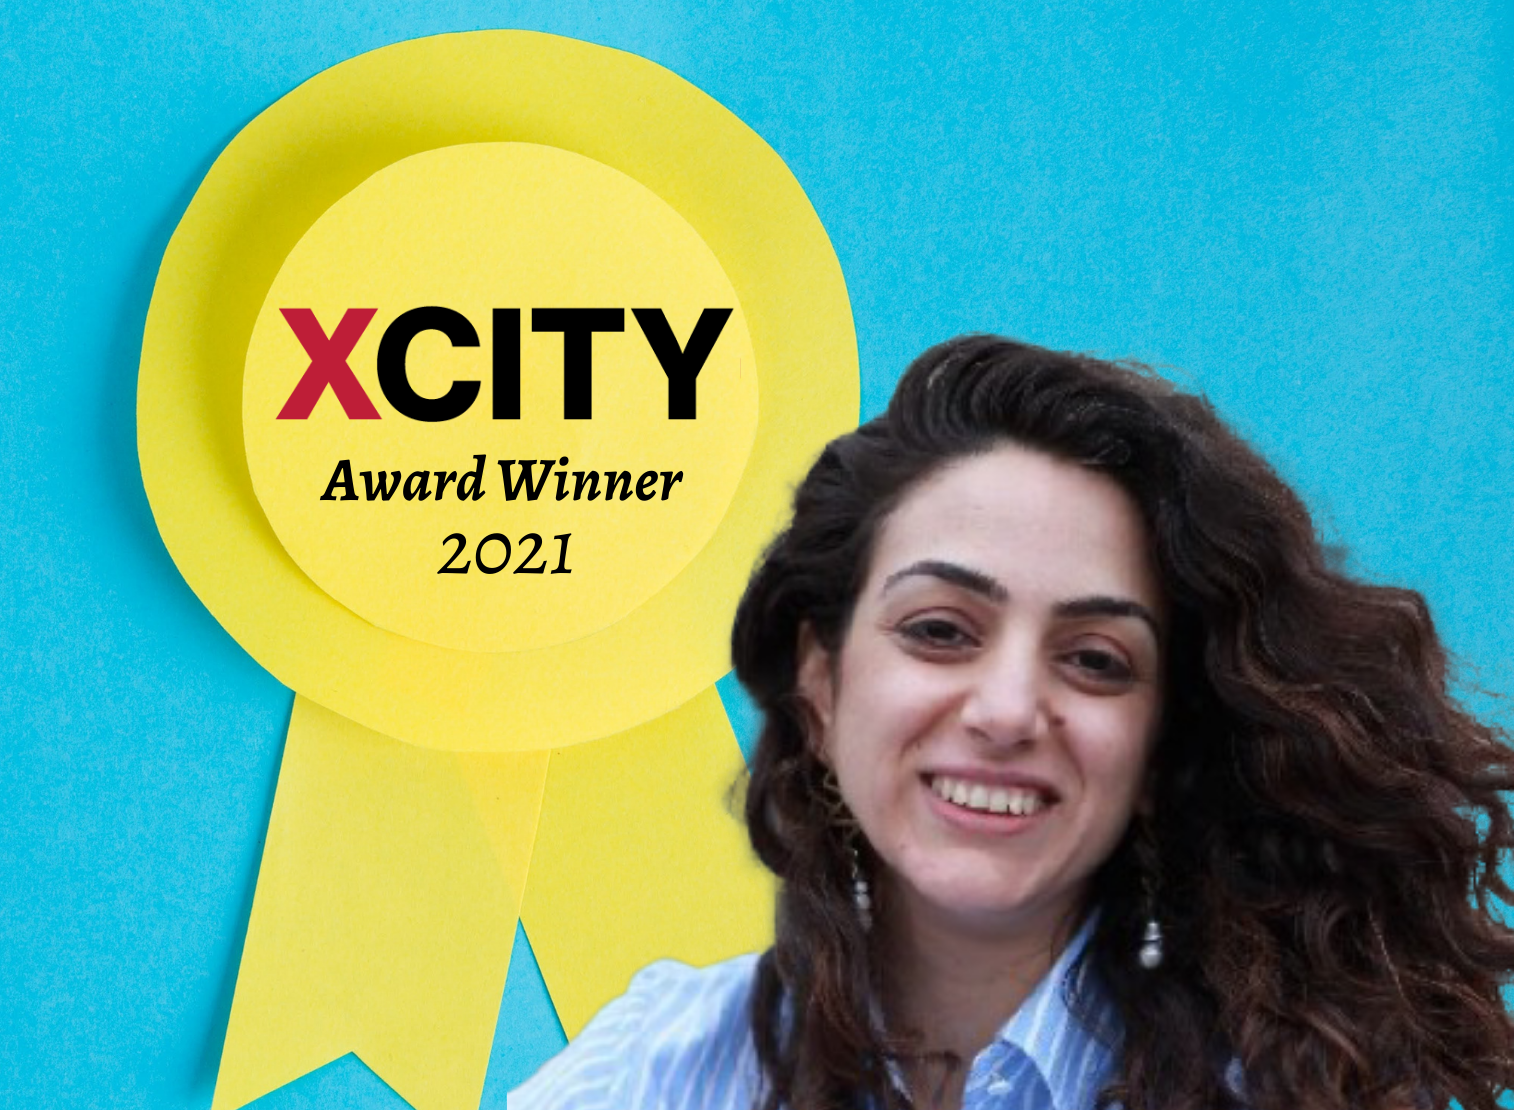 XCity Award winner announced: Dina Aboughazala